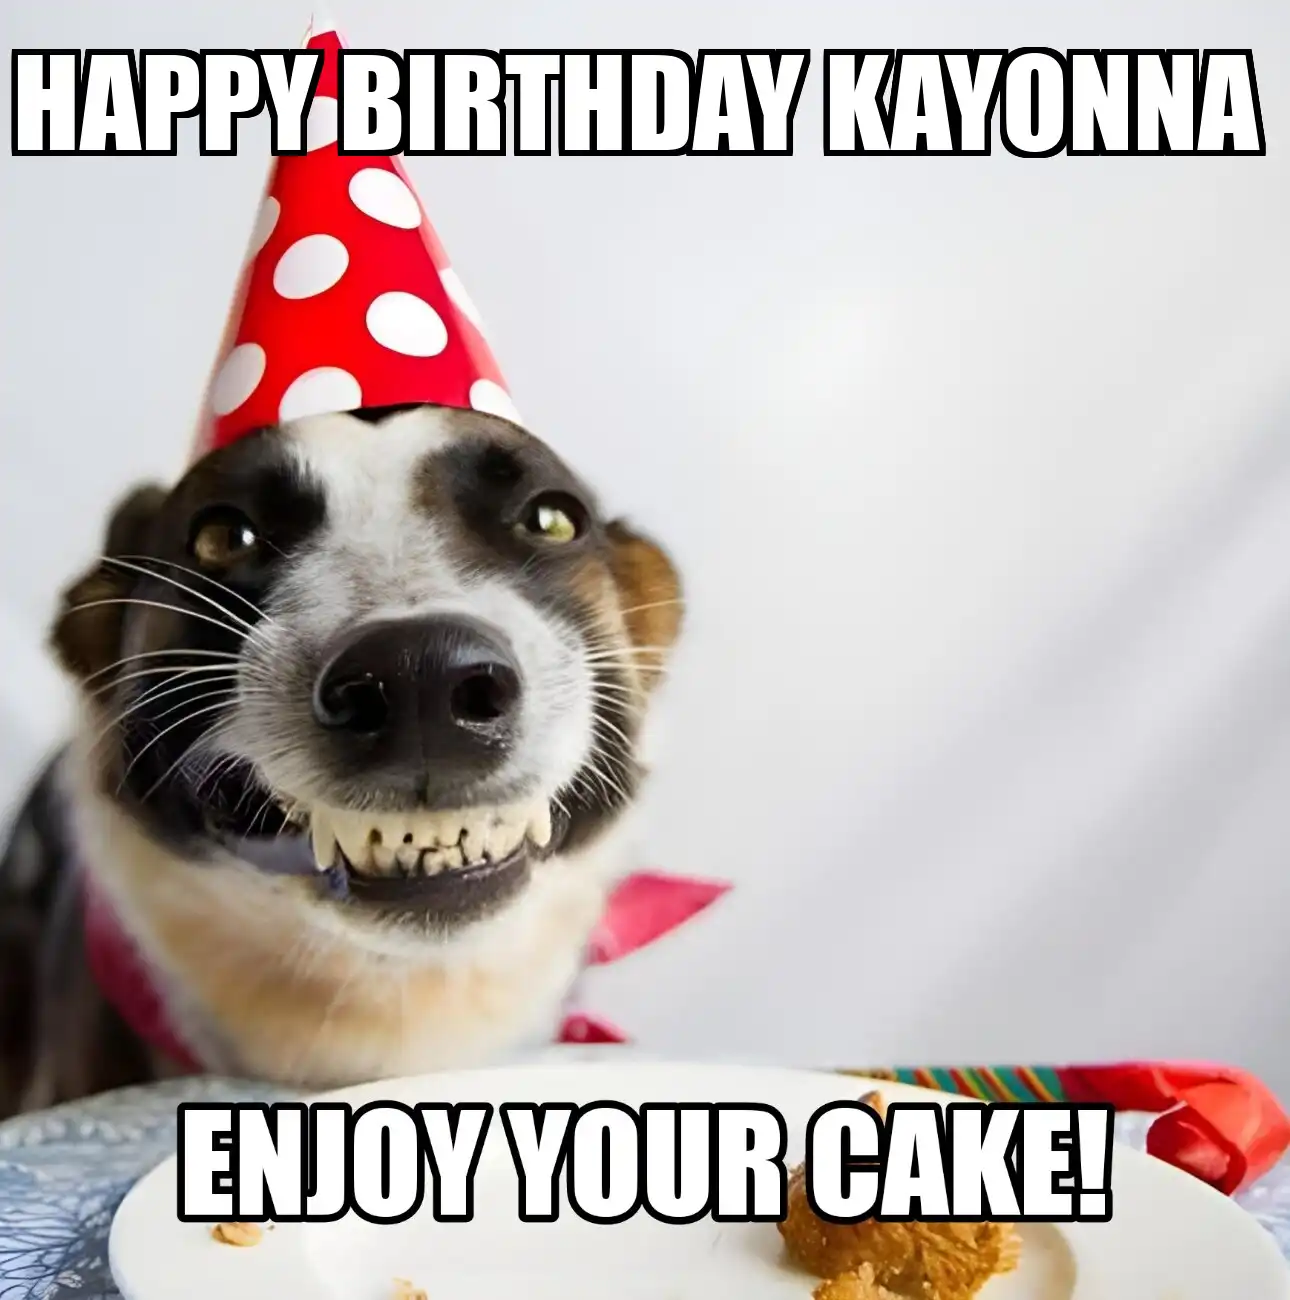 Happy Birthday Kayonna Enjoy Your Cake Dog Meme